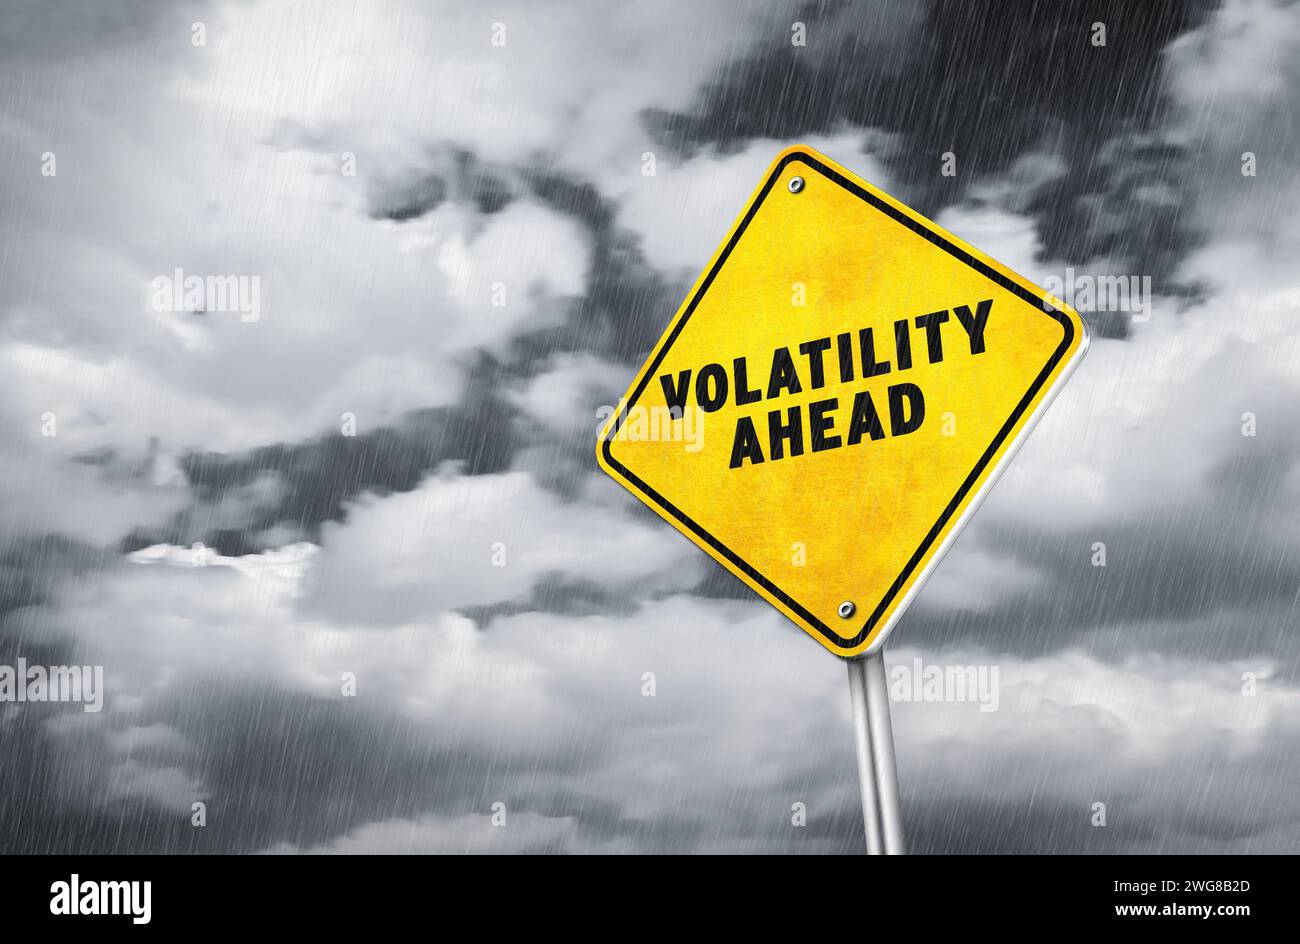 Volatility Ahead road sign warning Stock Photo